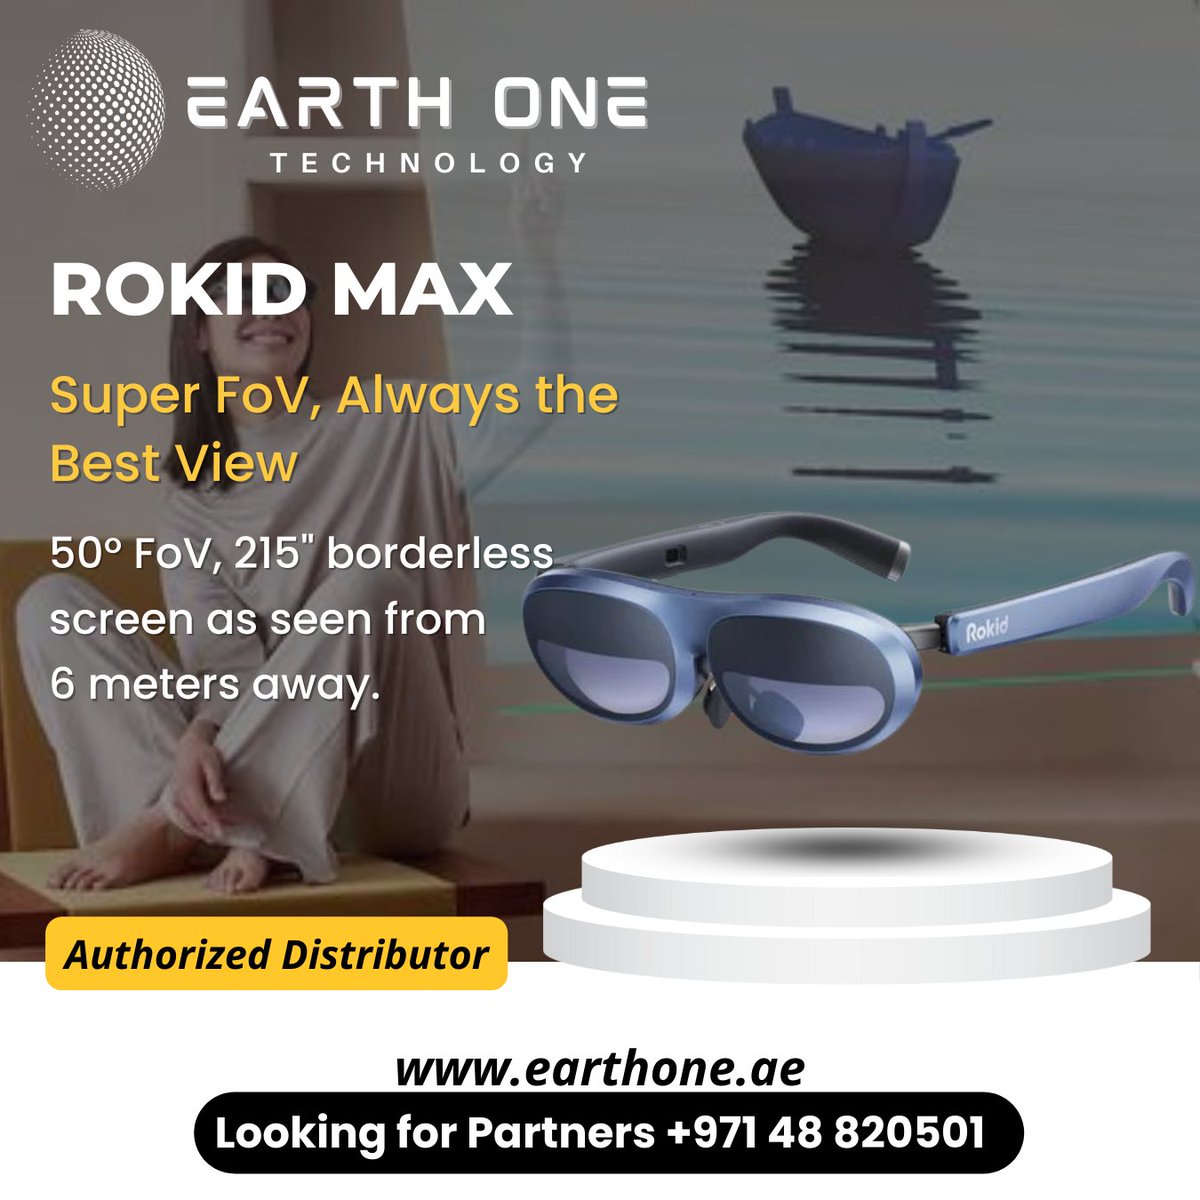 #earthone Rokid Max AR glasses

smpl.is/92nqe

#earthonedubai #smarttech #dubaitech #earthonetec #earthonetech #gcc #arglasses #rokidmax #rokidmaxglasses #rokidglasses